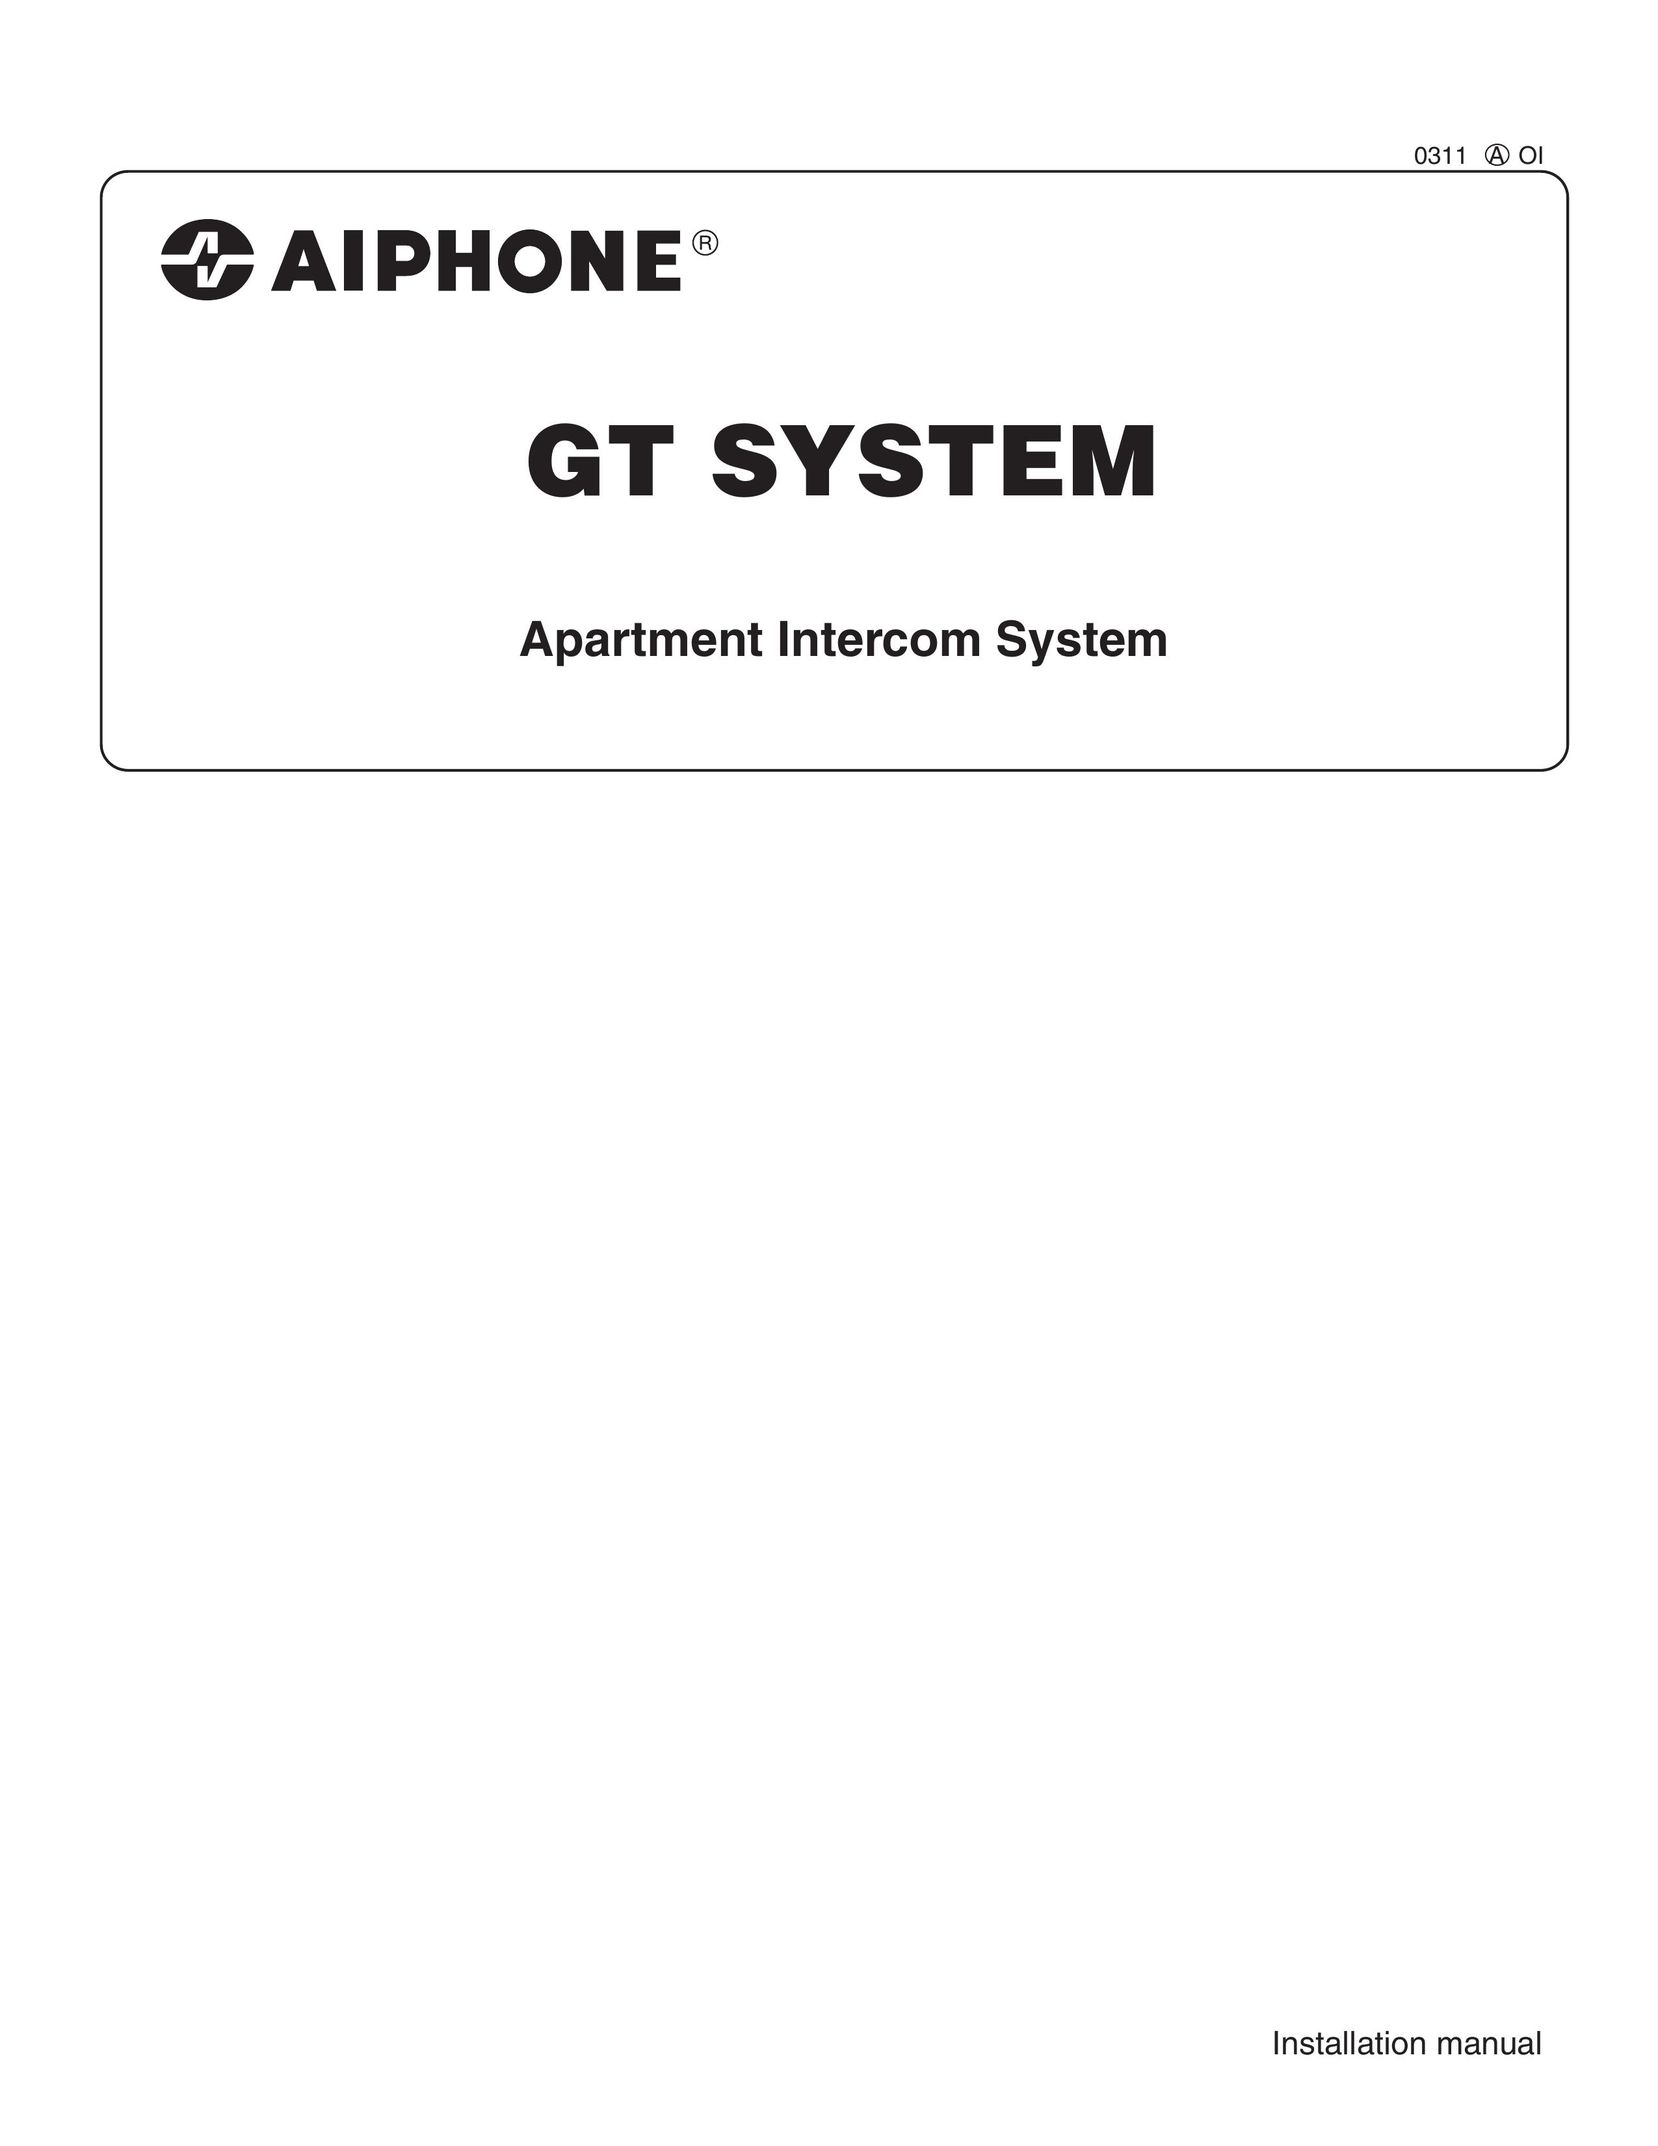 Aiphone 0311 A OI Intercom System User Manual